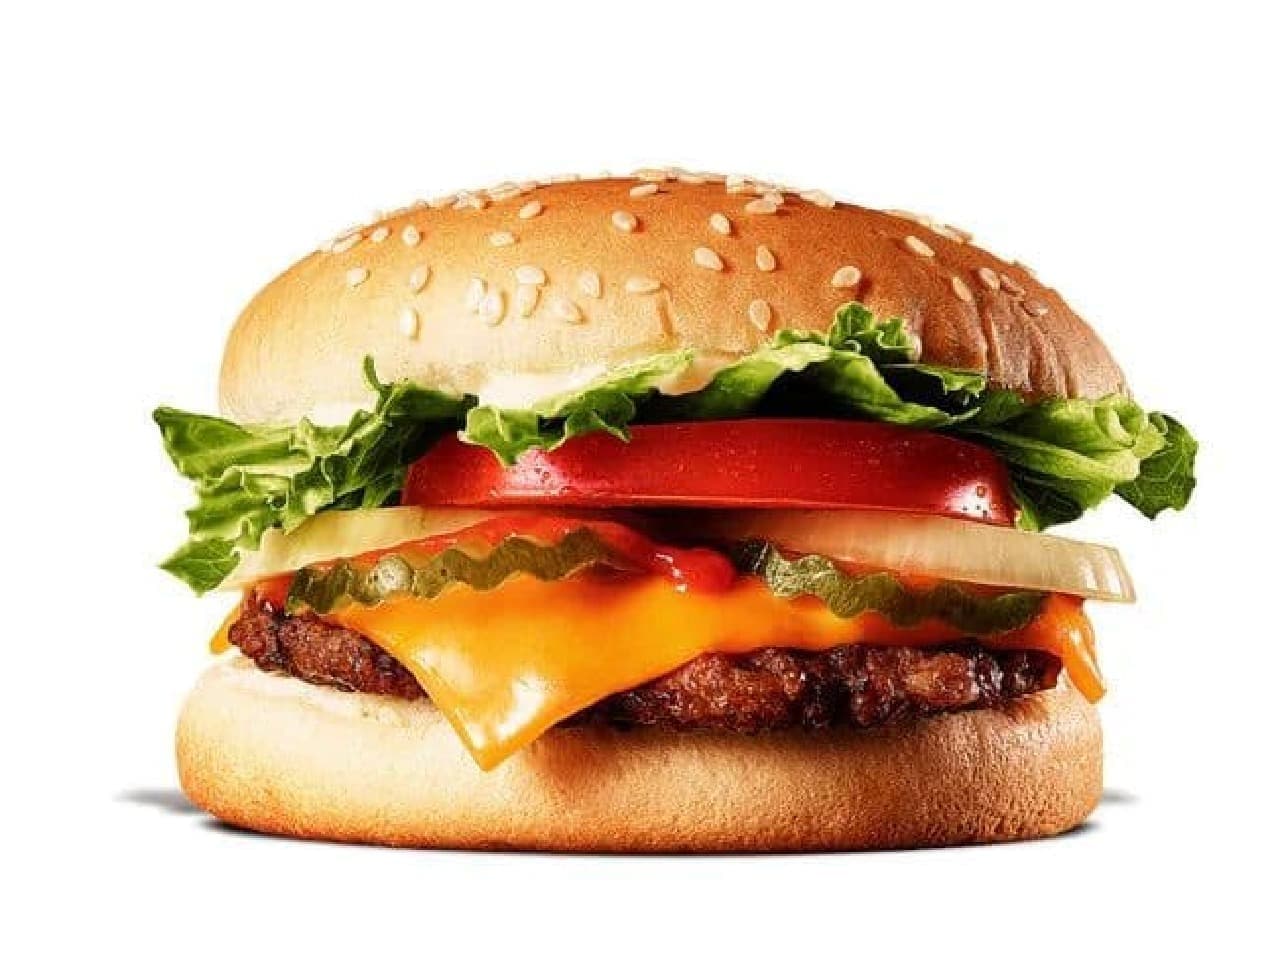 Burger King "Whopper Cheese Jr."